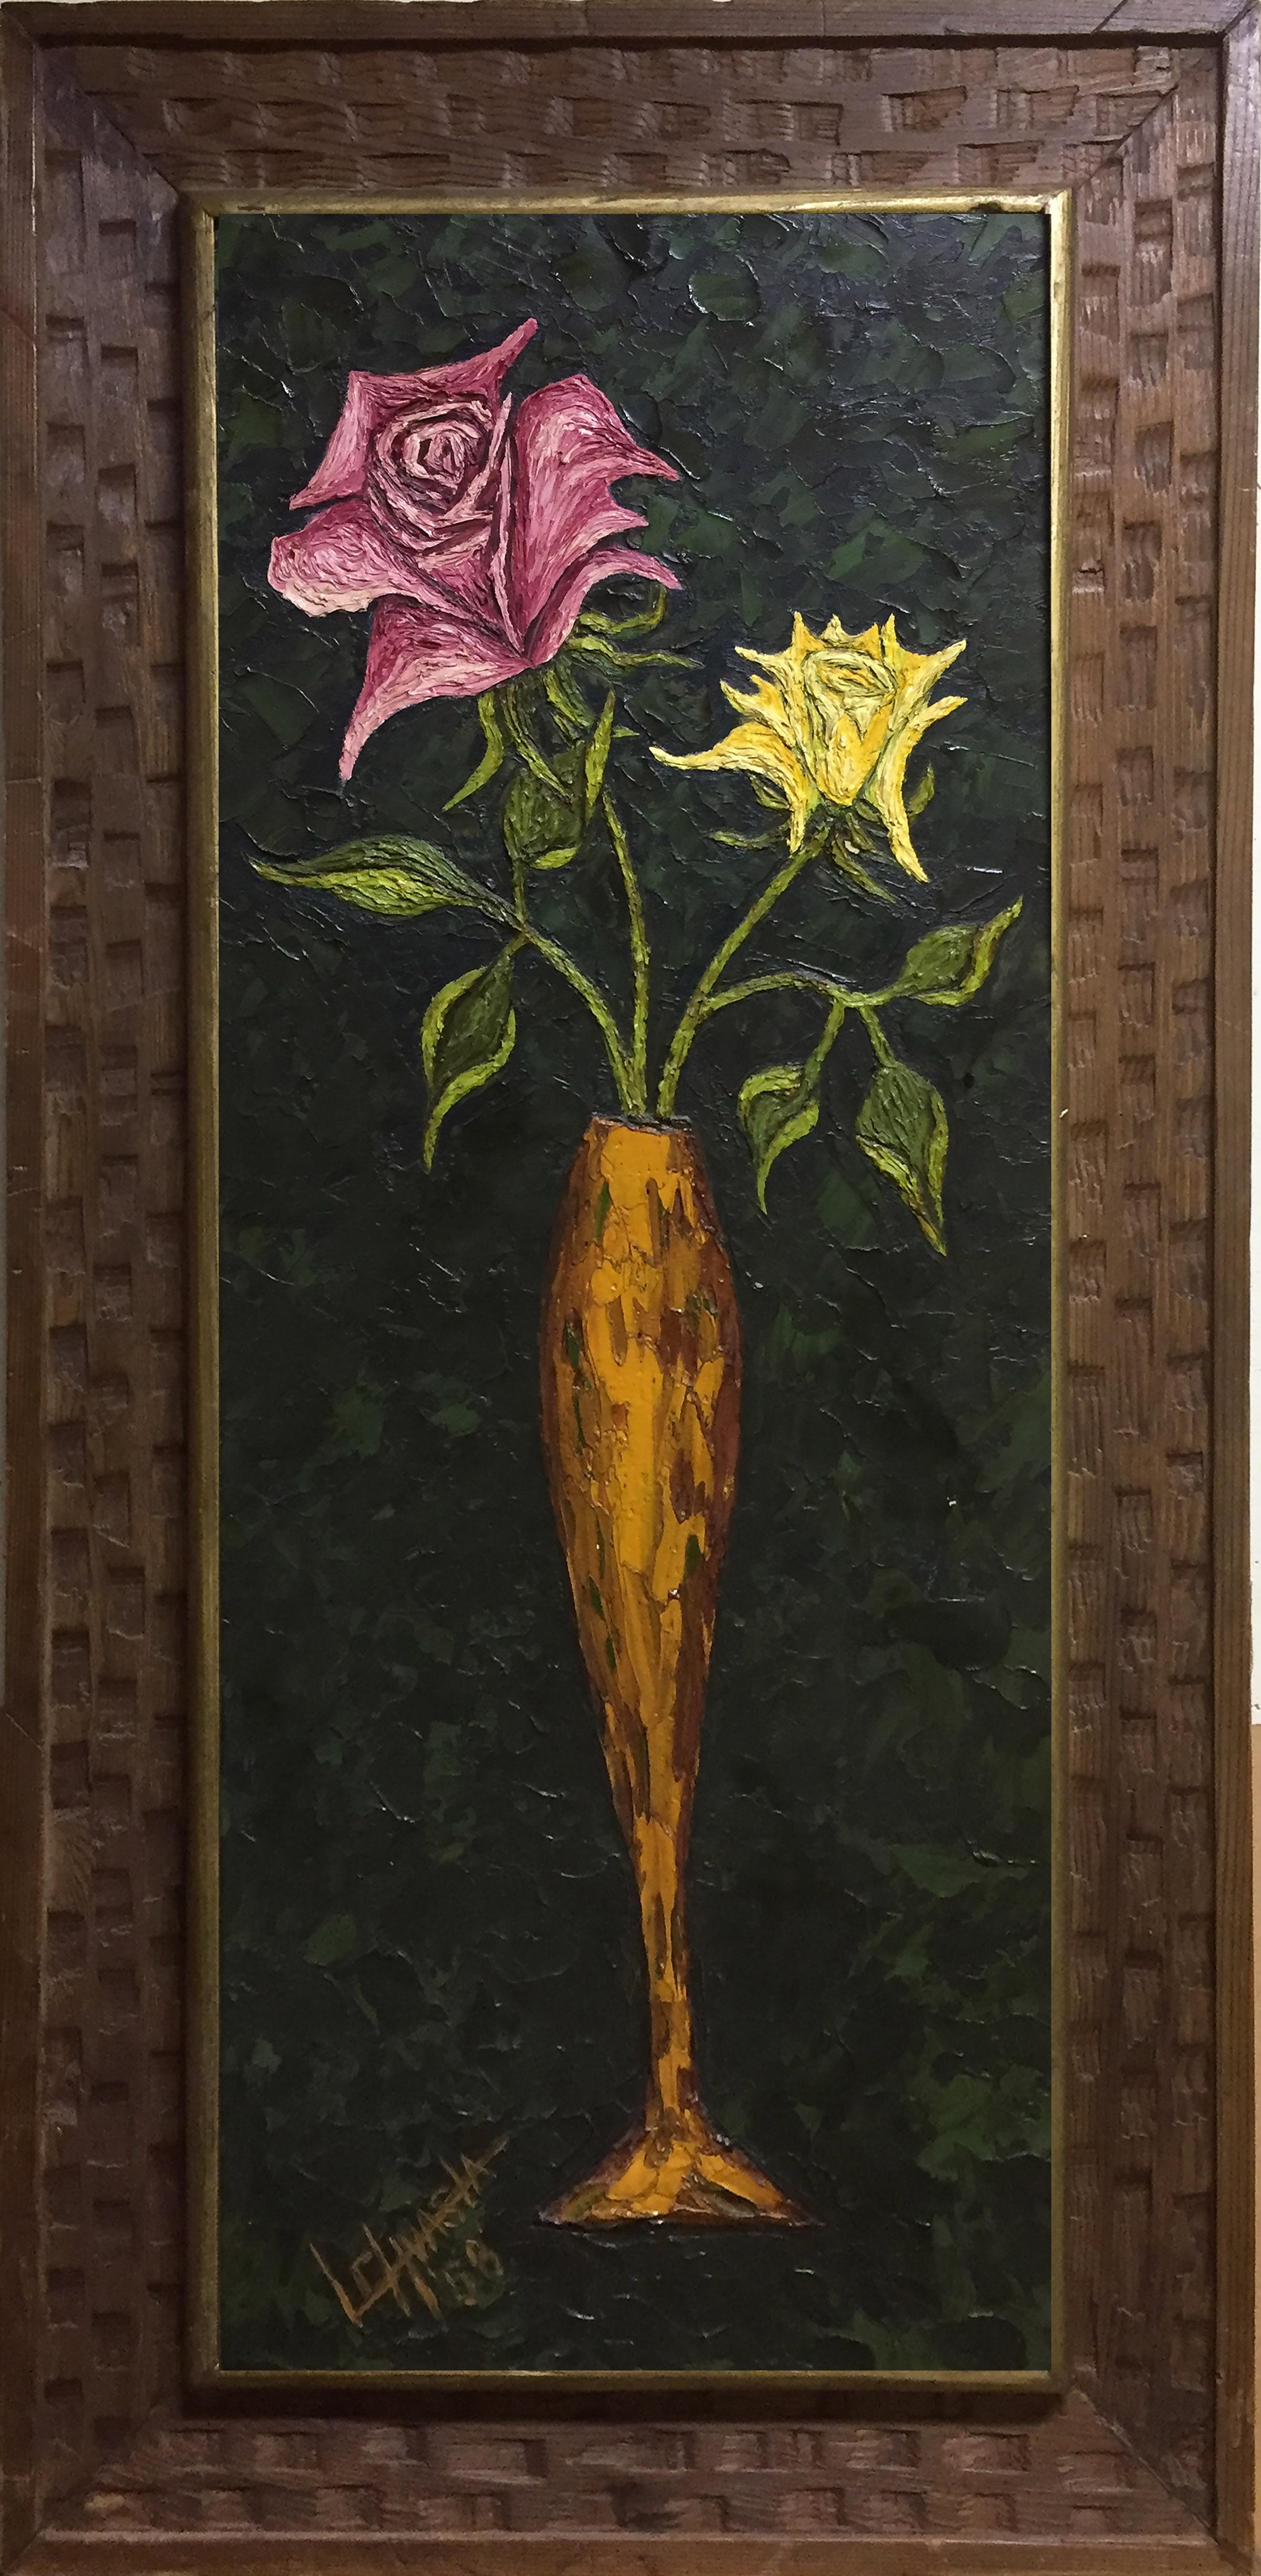 Roses - Painting by Louis Carl Hvasta